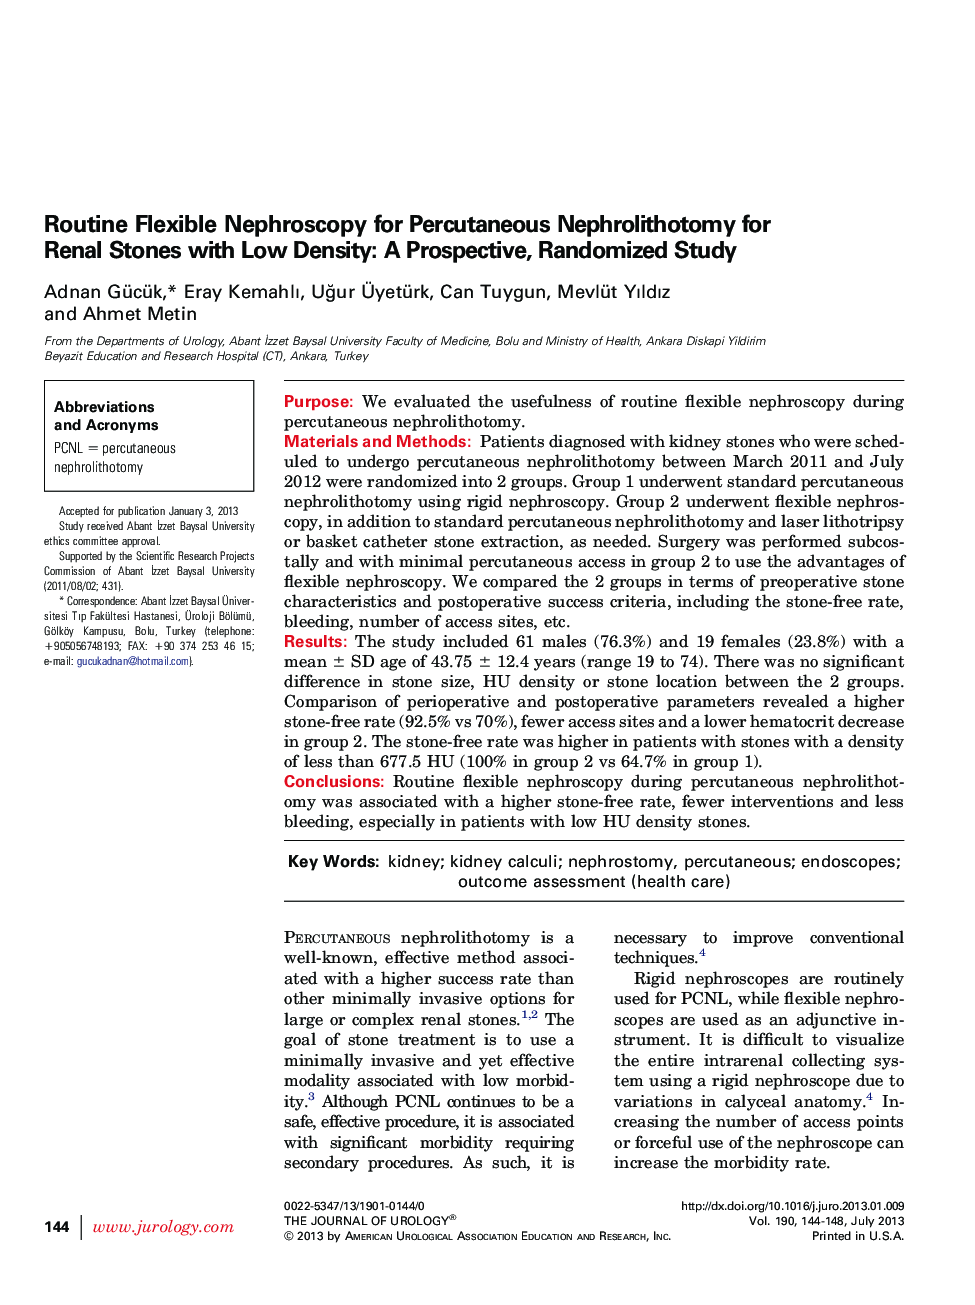 Routine Flexible Nephroscopy for Percutaneous Nephrolithotomy for Renal Stones with Low Density: A Prospective, Randomized Study 